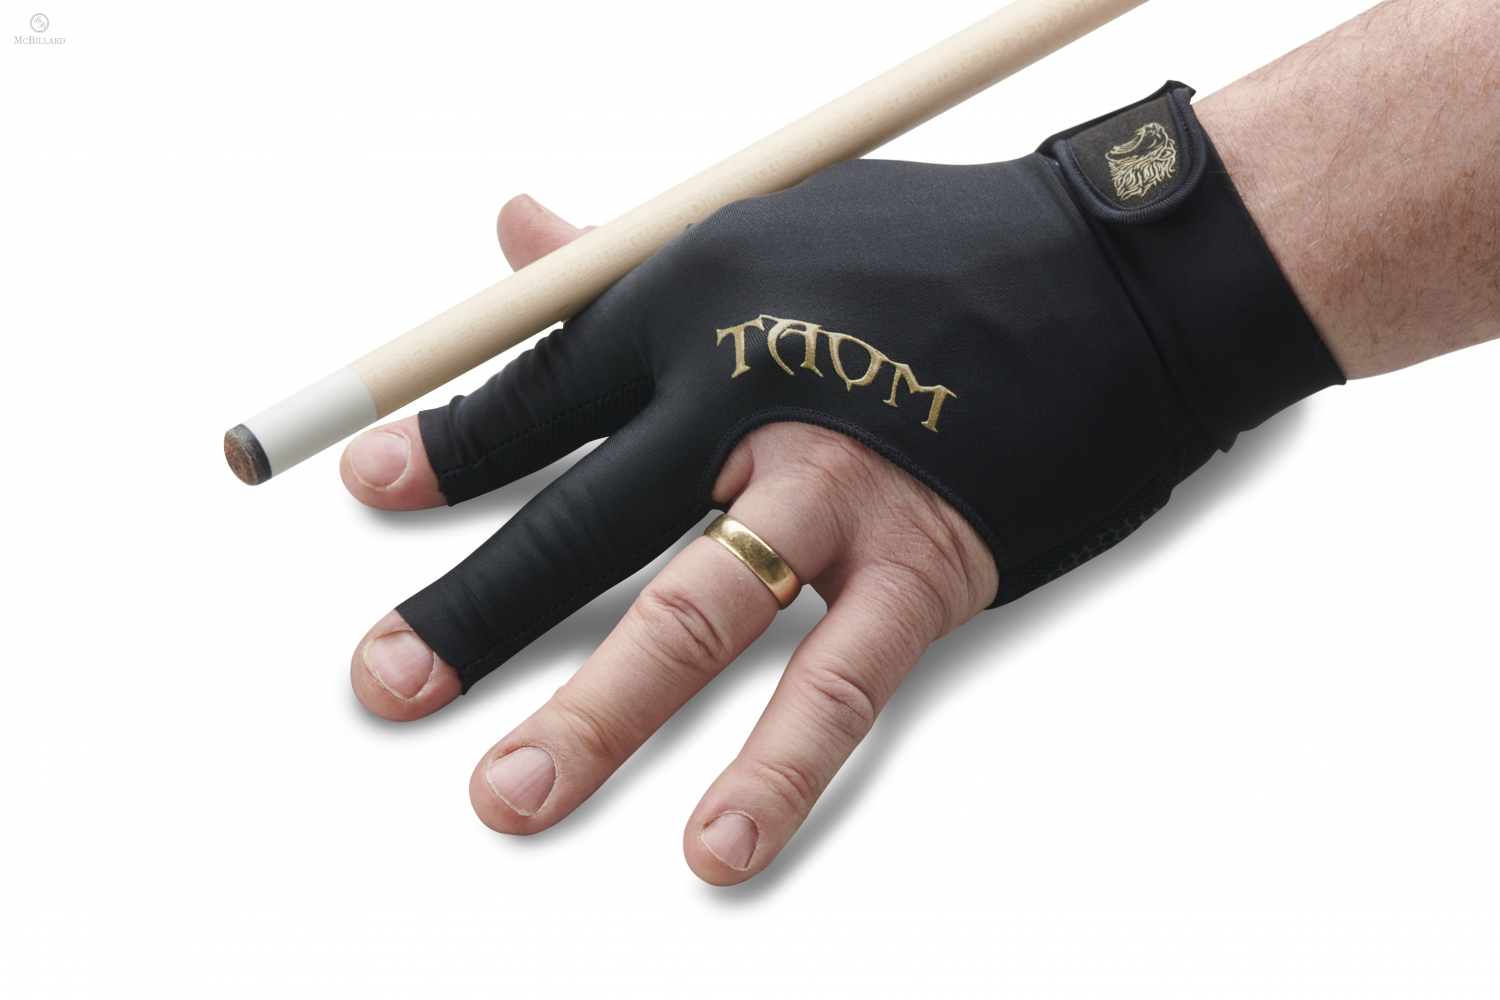 Billiard Glove TAOM - 3-finger - Left Hand Glove - Size M